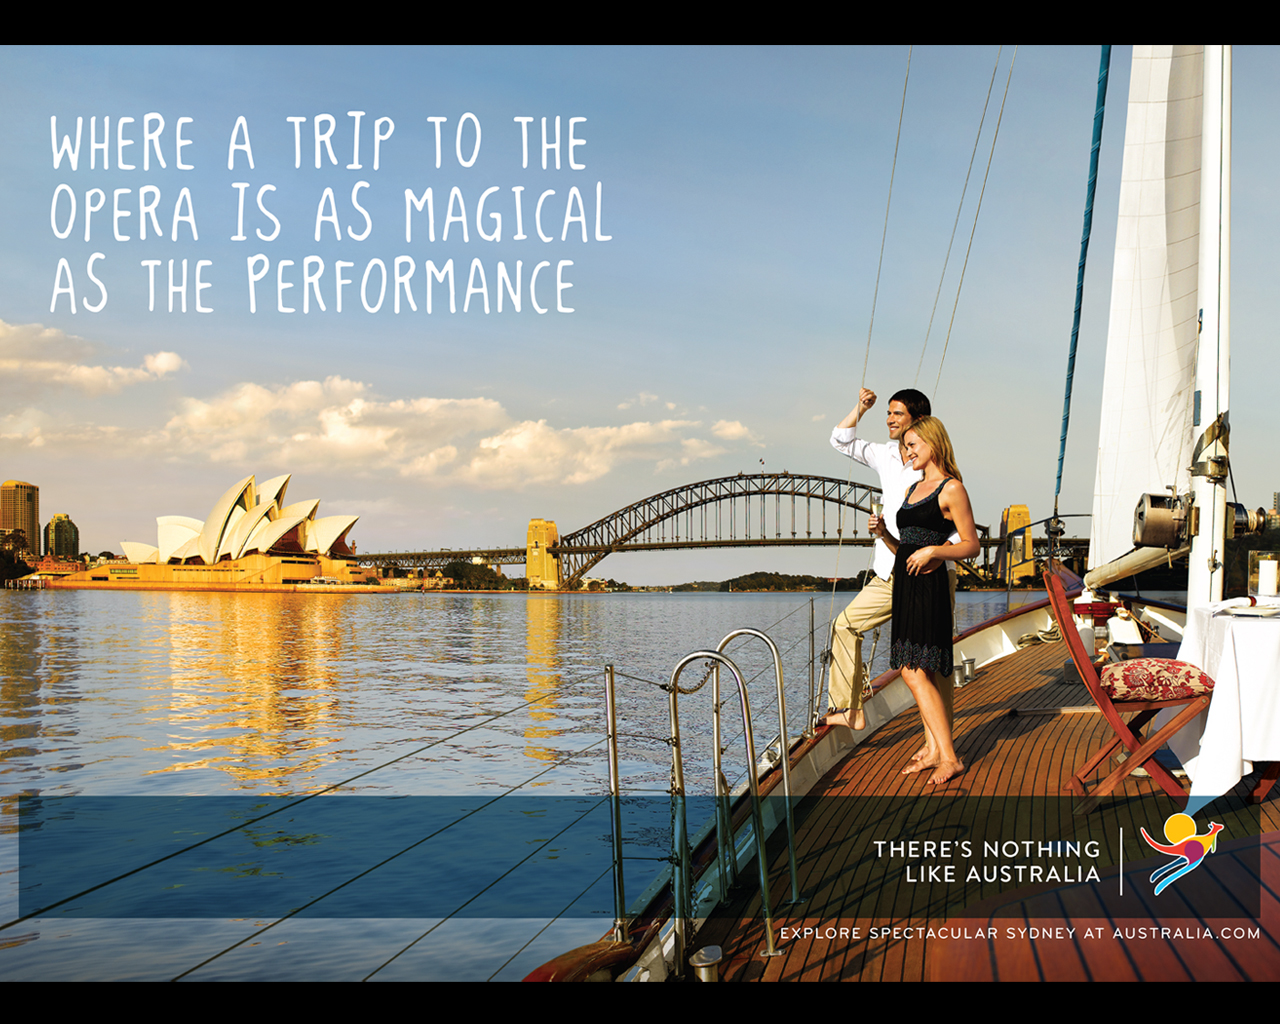 Screensaver And Digital Wallpaper Campaigns Tourism Australia